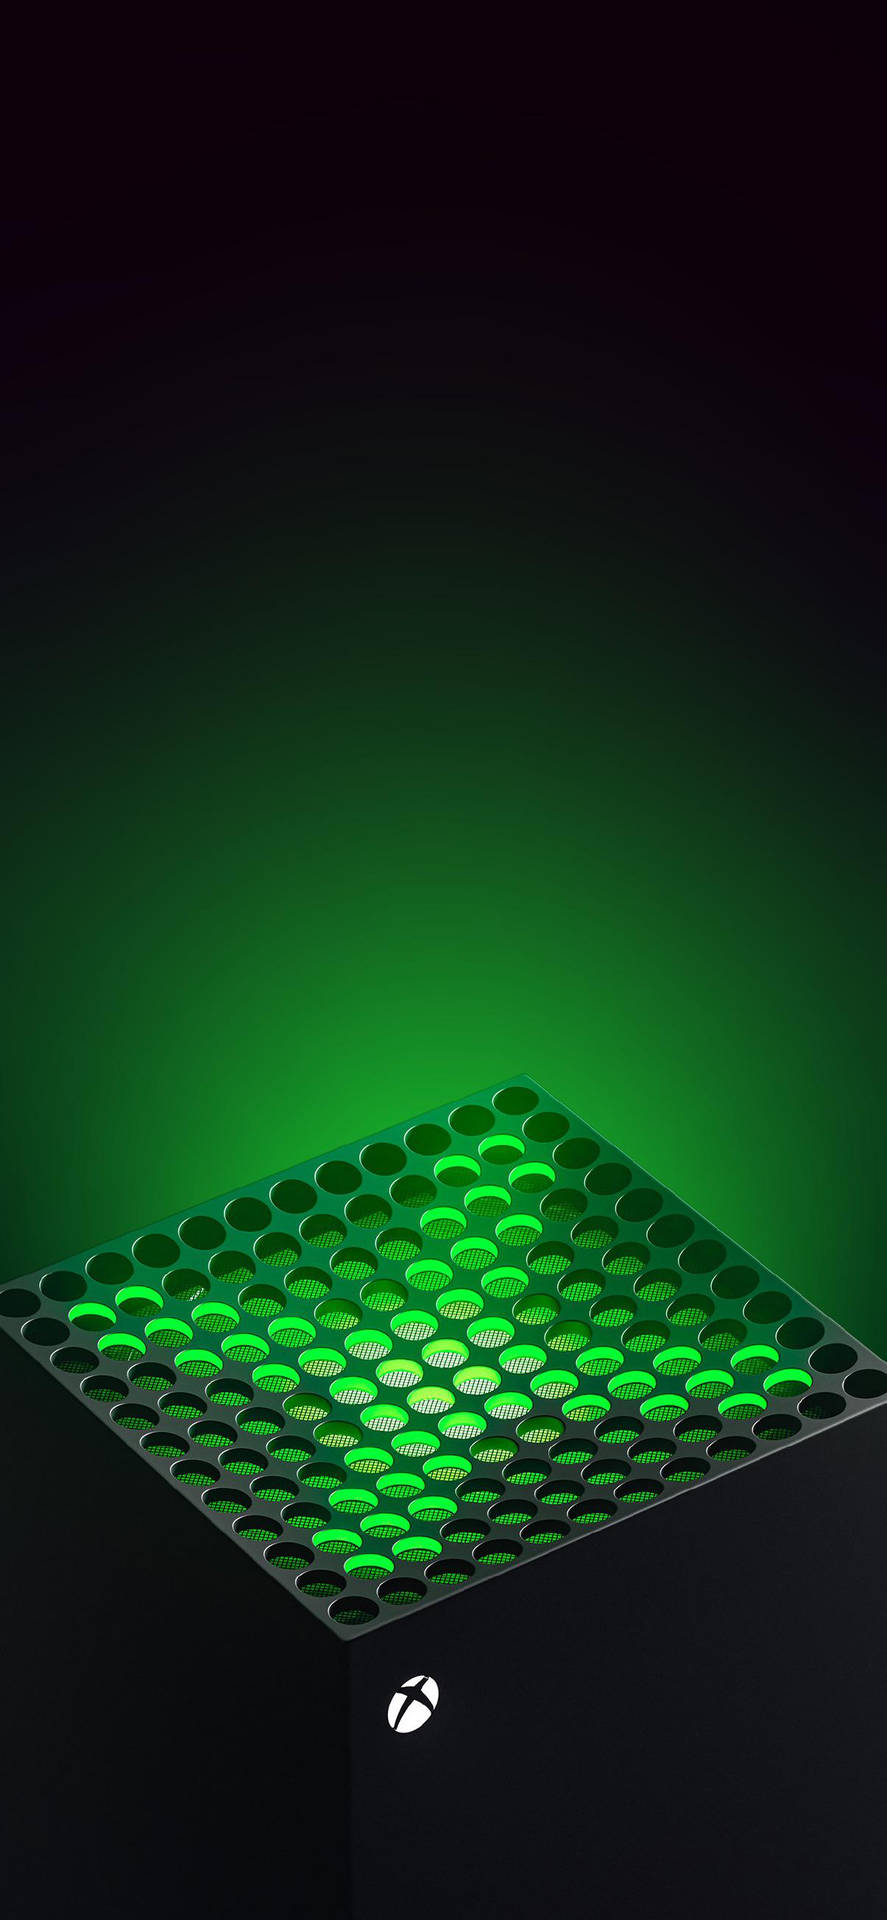 Xboxseries X Mit Grüner Beleuchtung Wallpaper